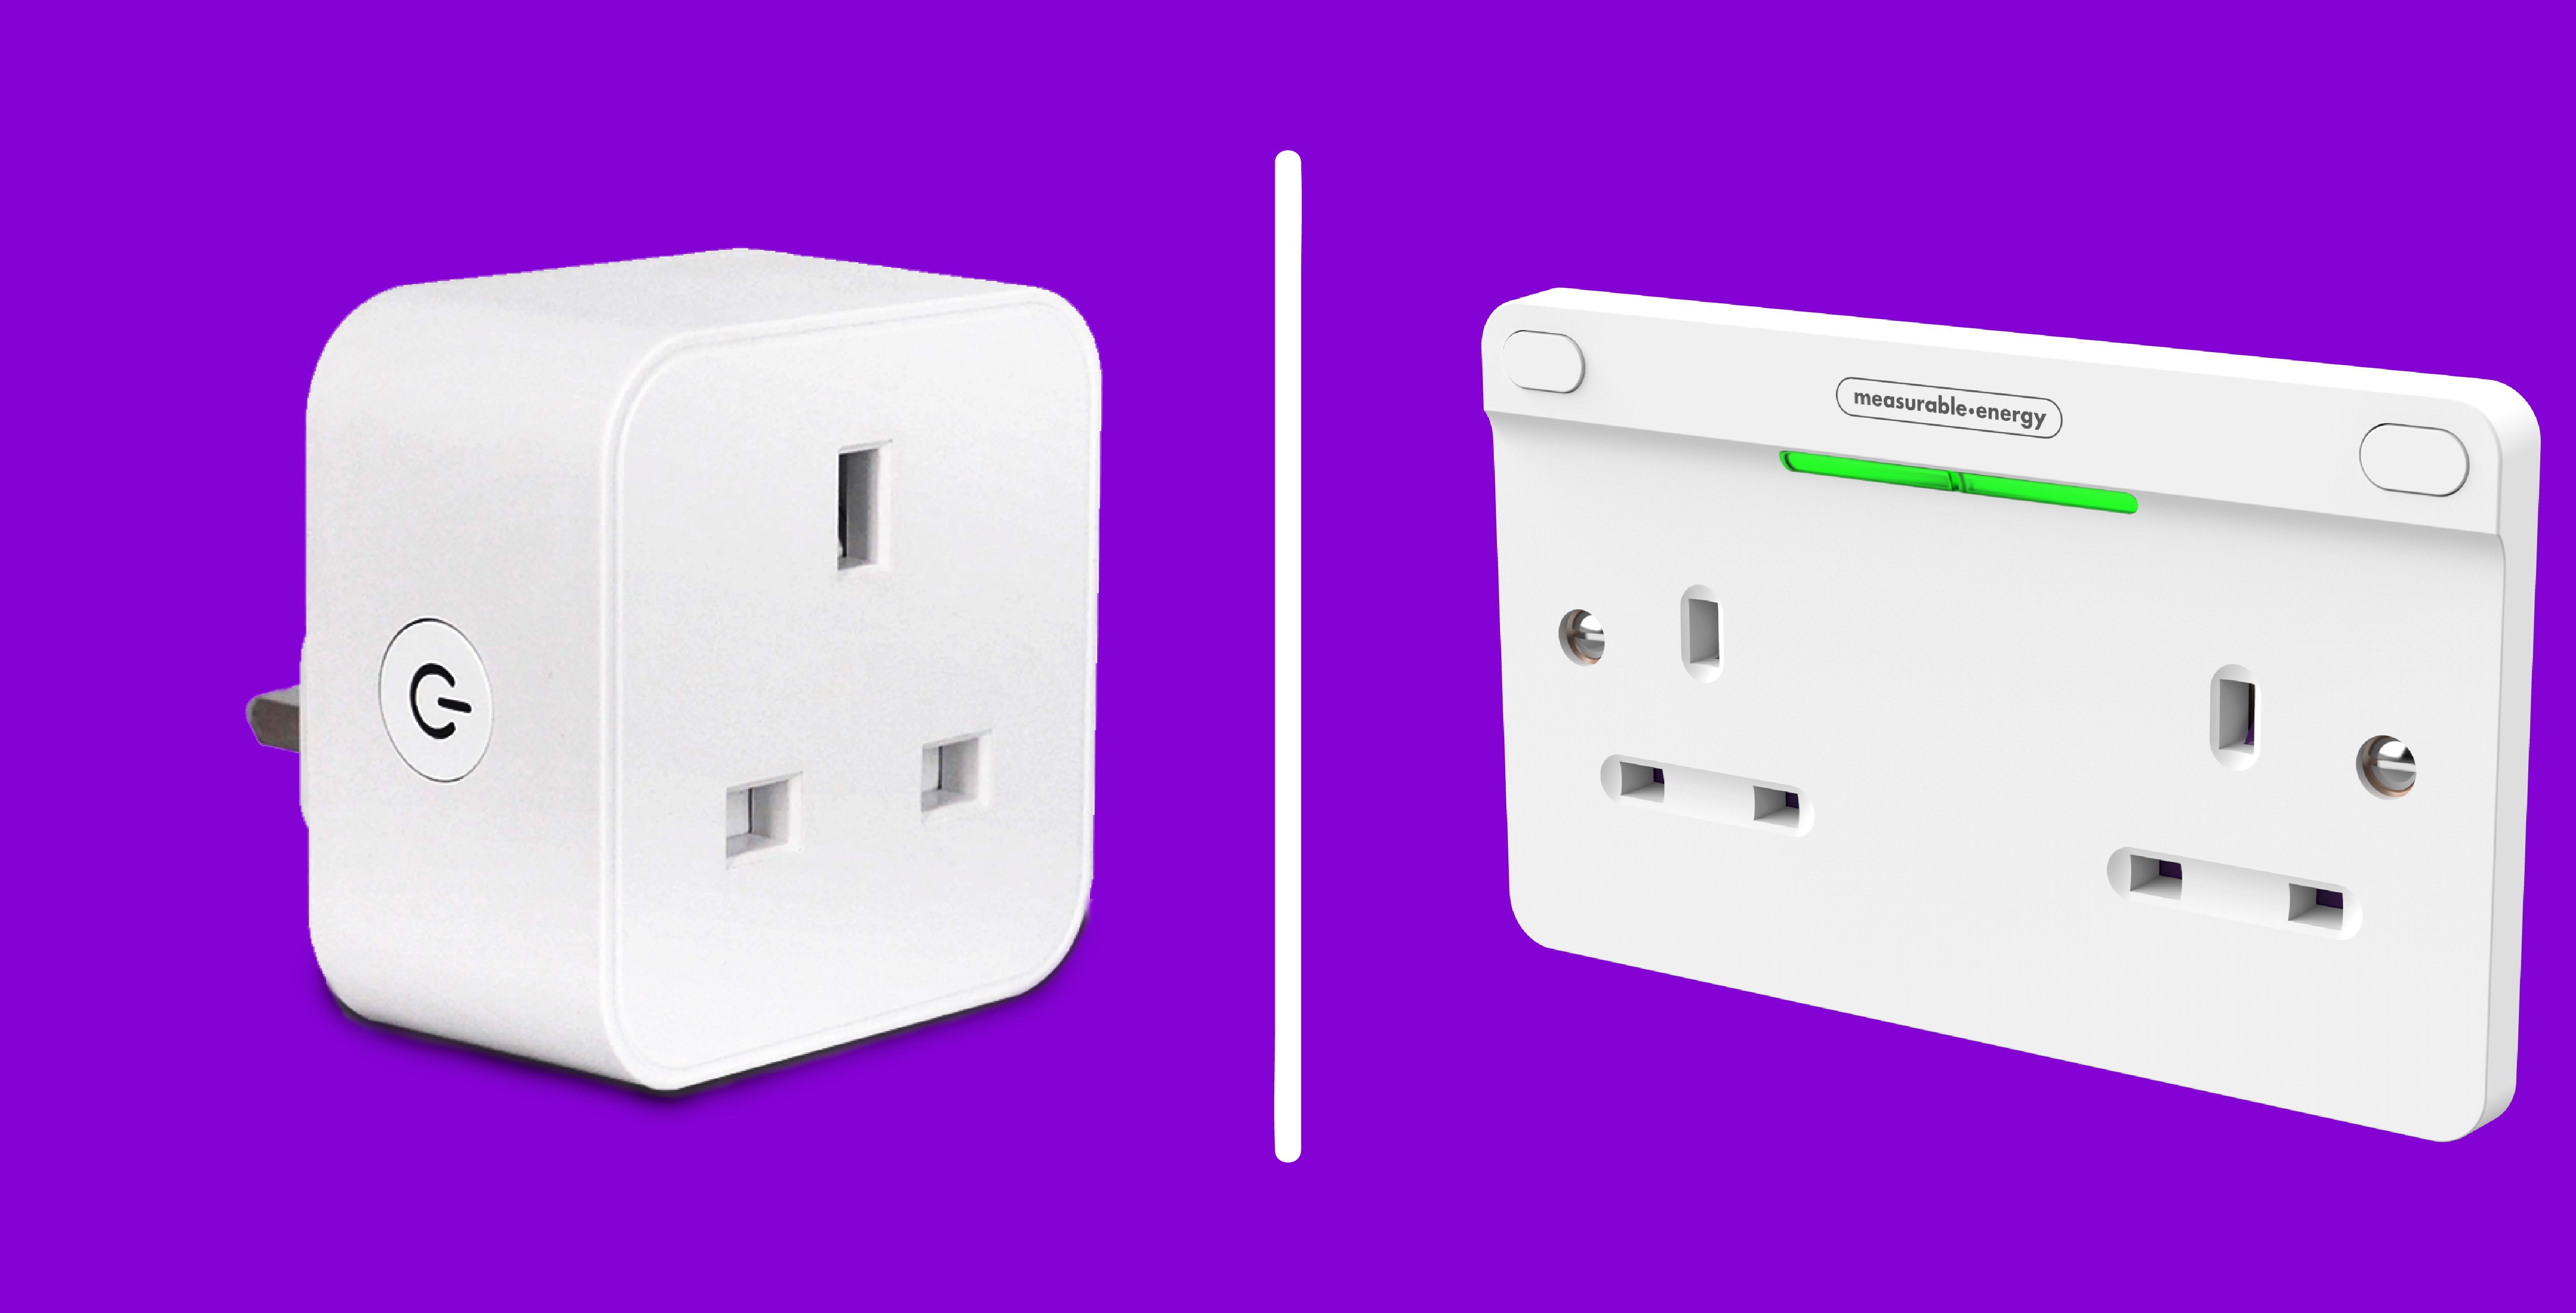 smart socket and measurable energy socket side by side on a purple background.